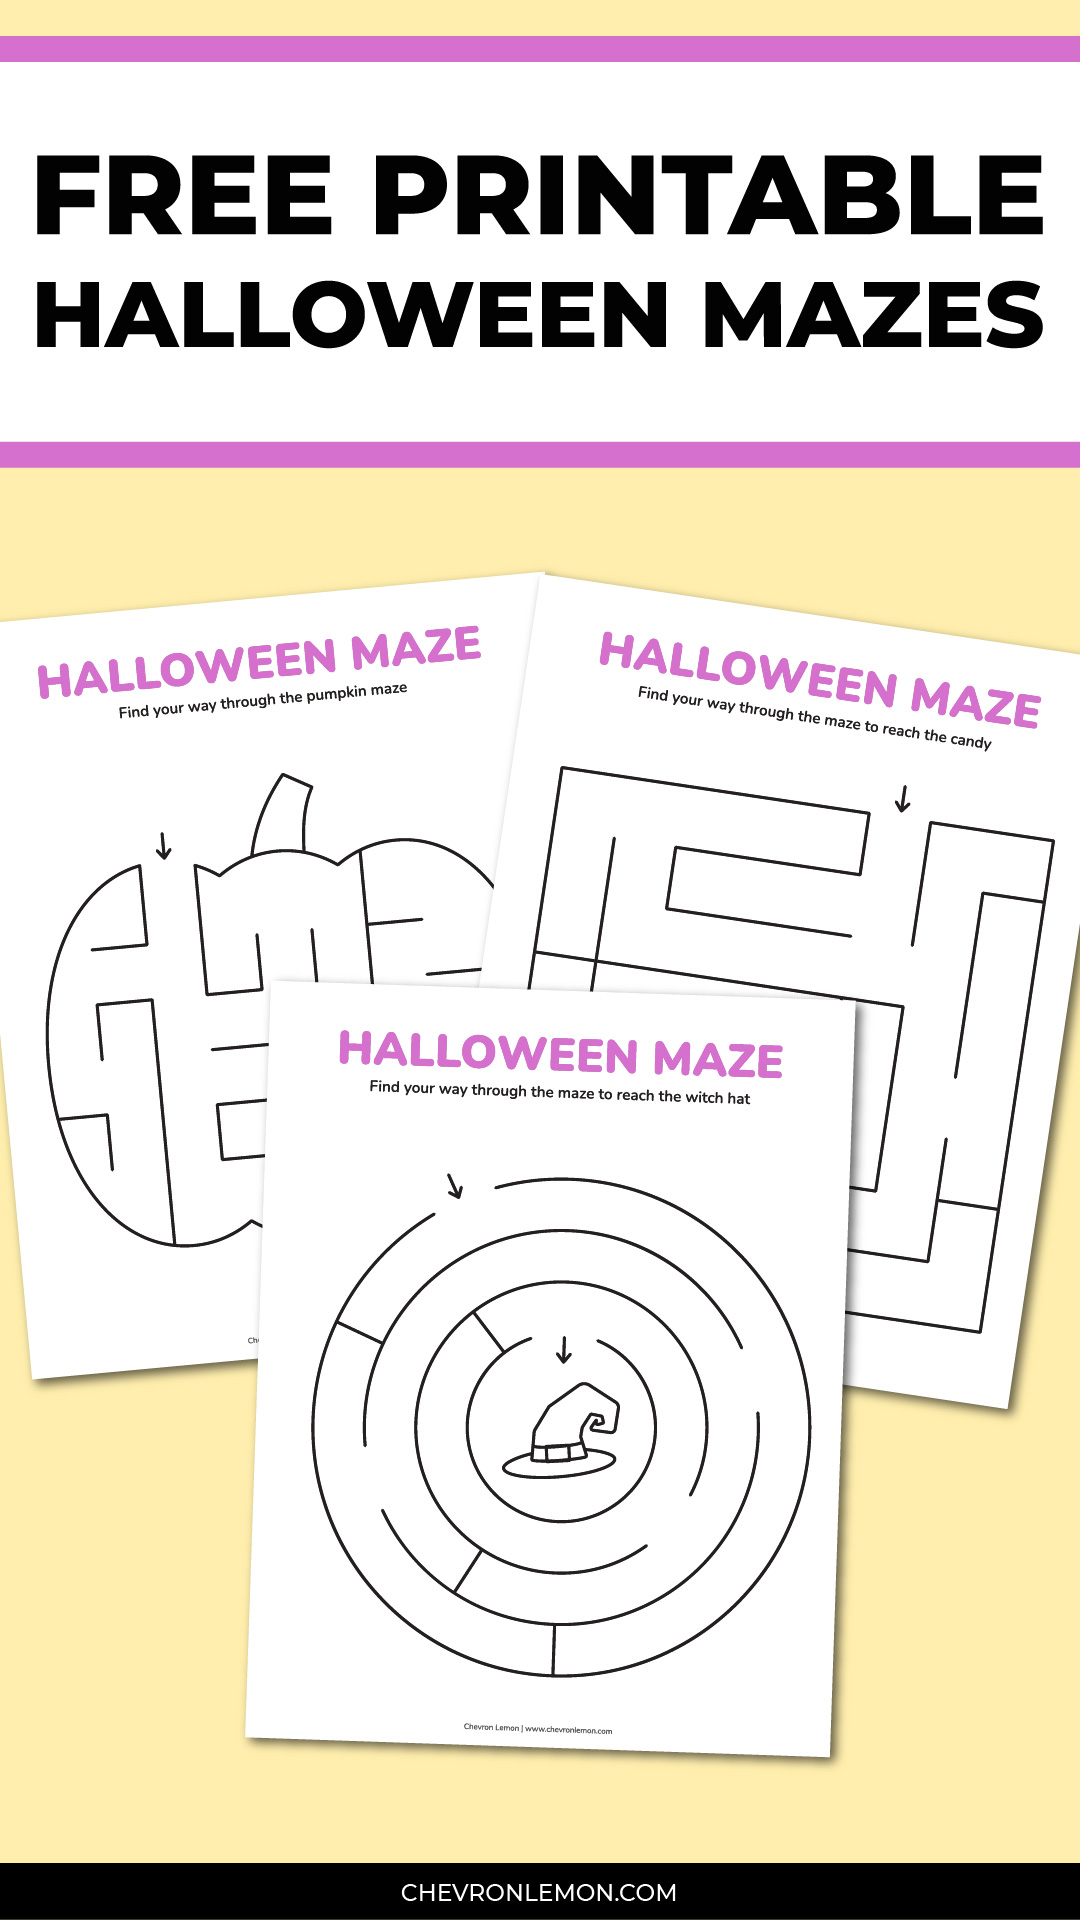 Simple Halloween mazes